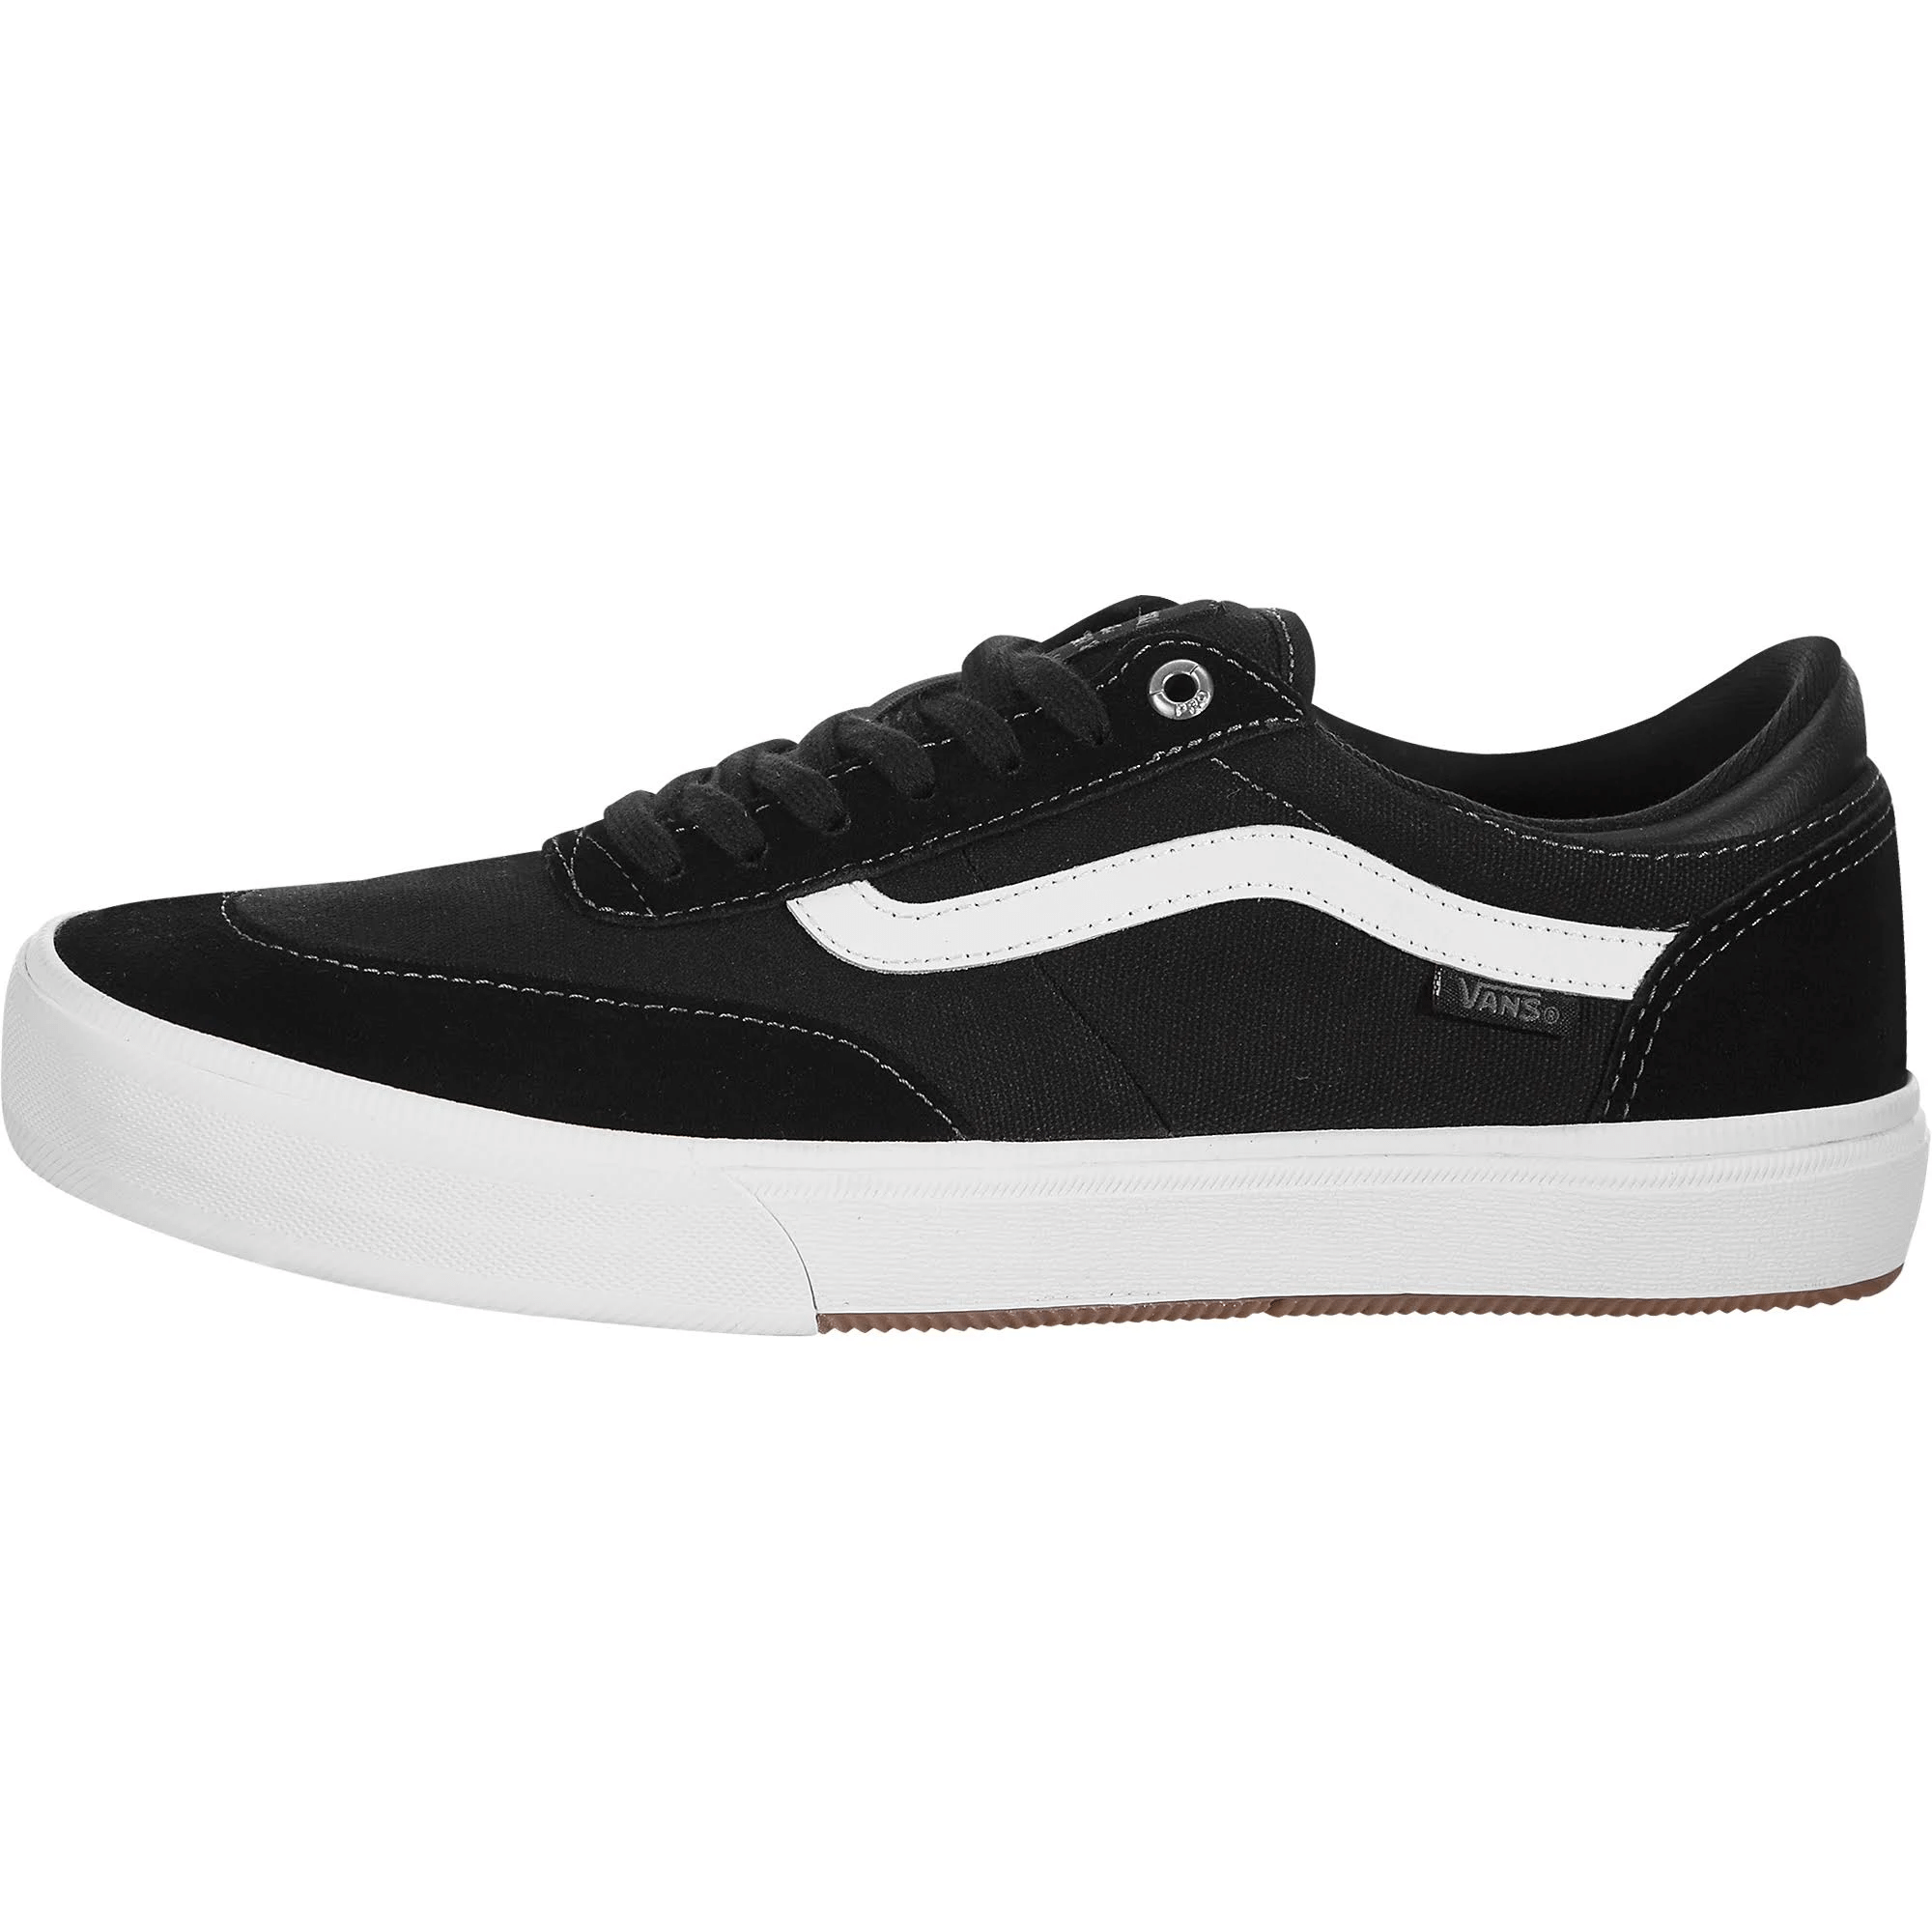 Vans Gilbert Crockett Pro 2 (Black/True White) Skate Shoes - Thefalconwears